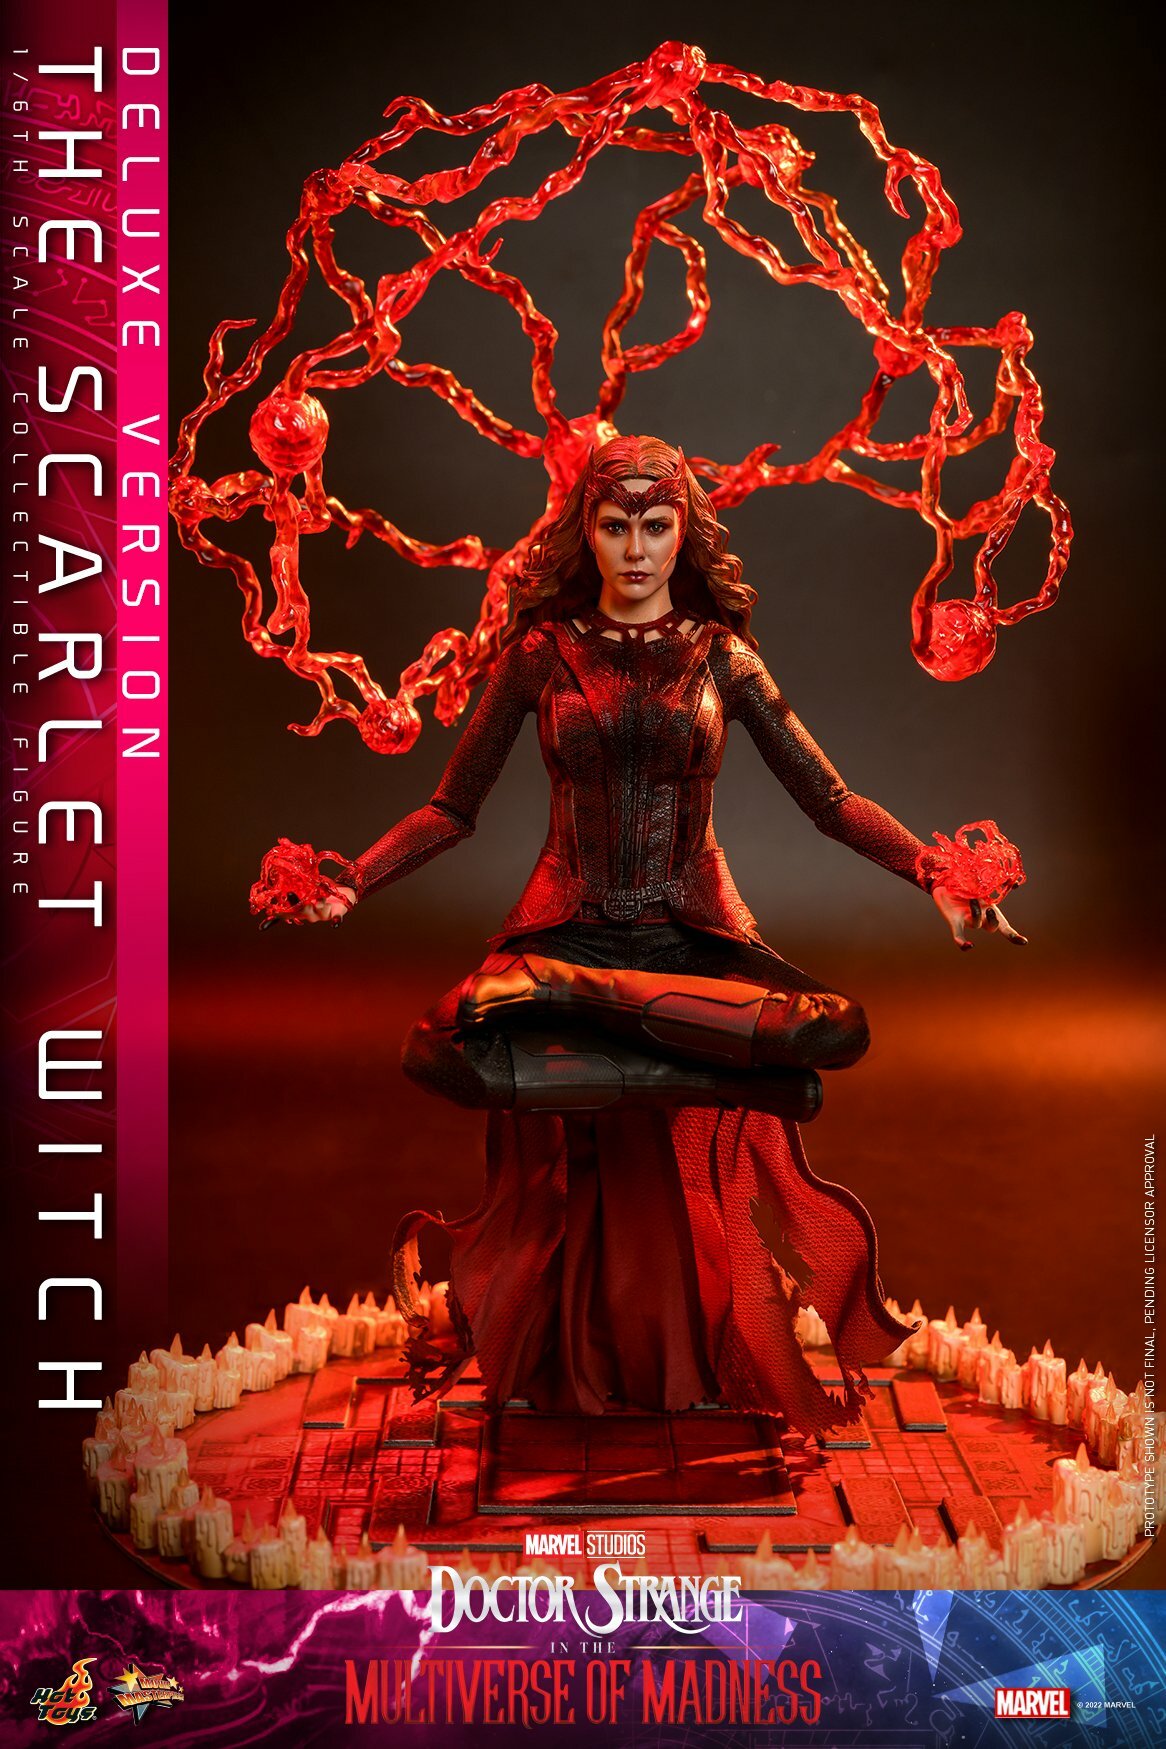 Hot-Toy-Multiverse-of-Madness-Scarlet-Witch-DX-008.jpg.9c0ce188997da1b45f6b21f2ec449d2c.jpg